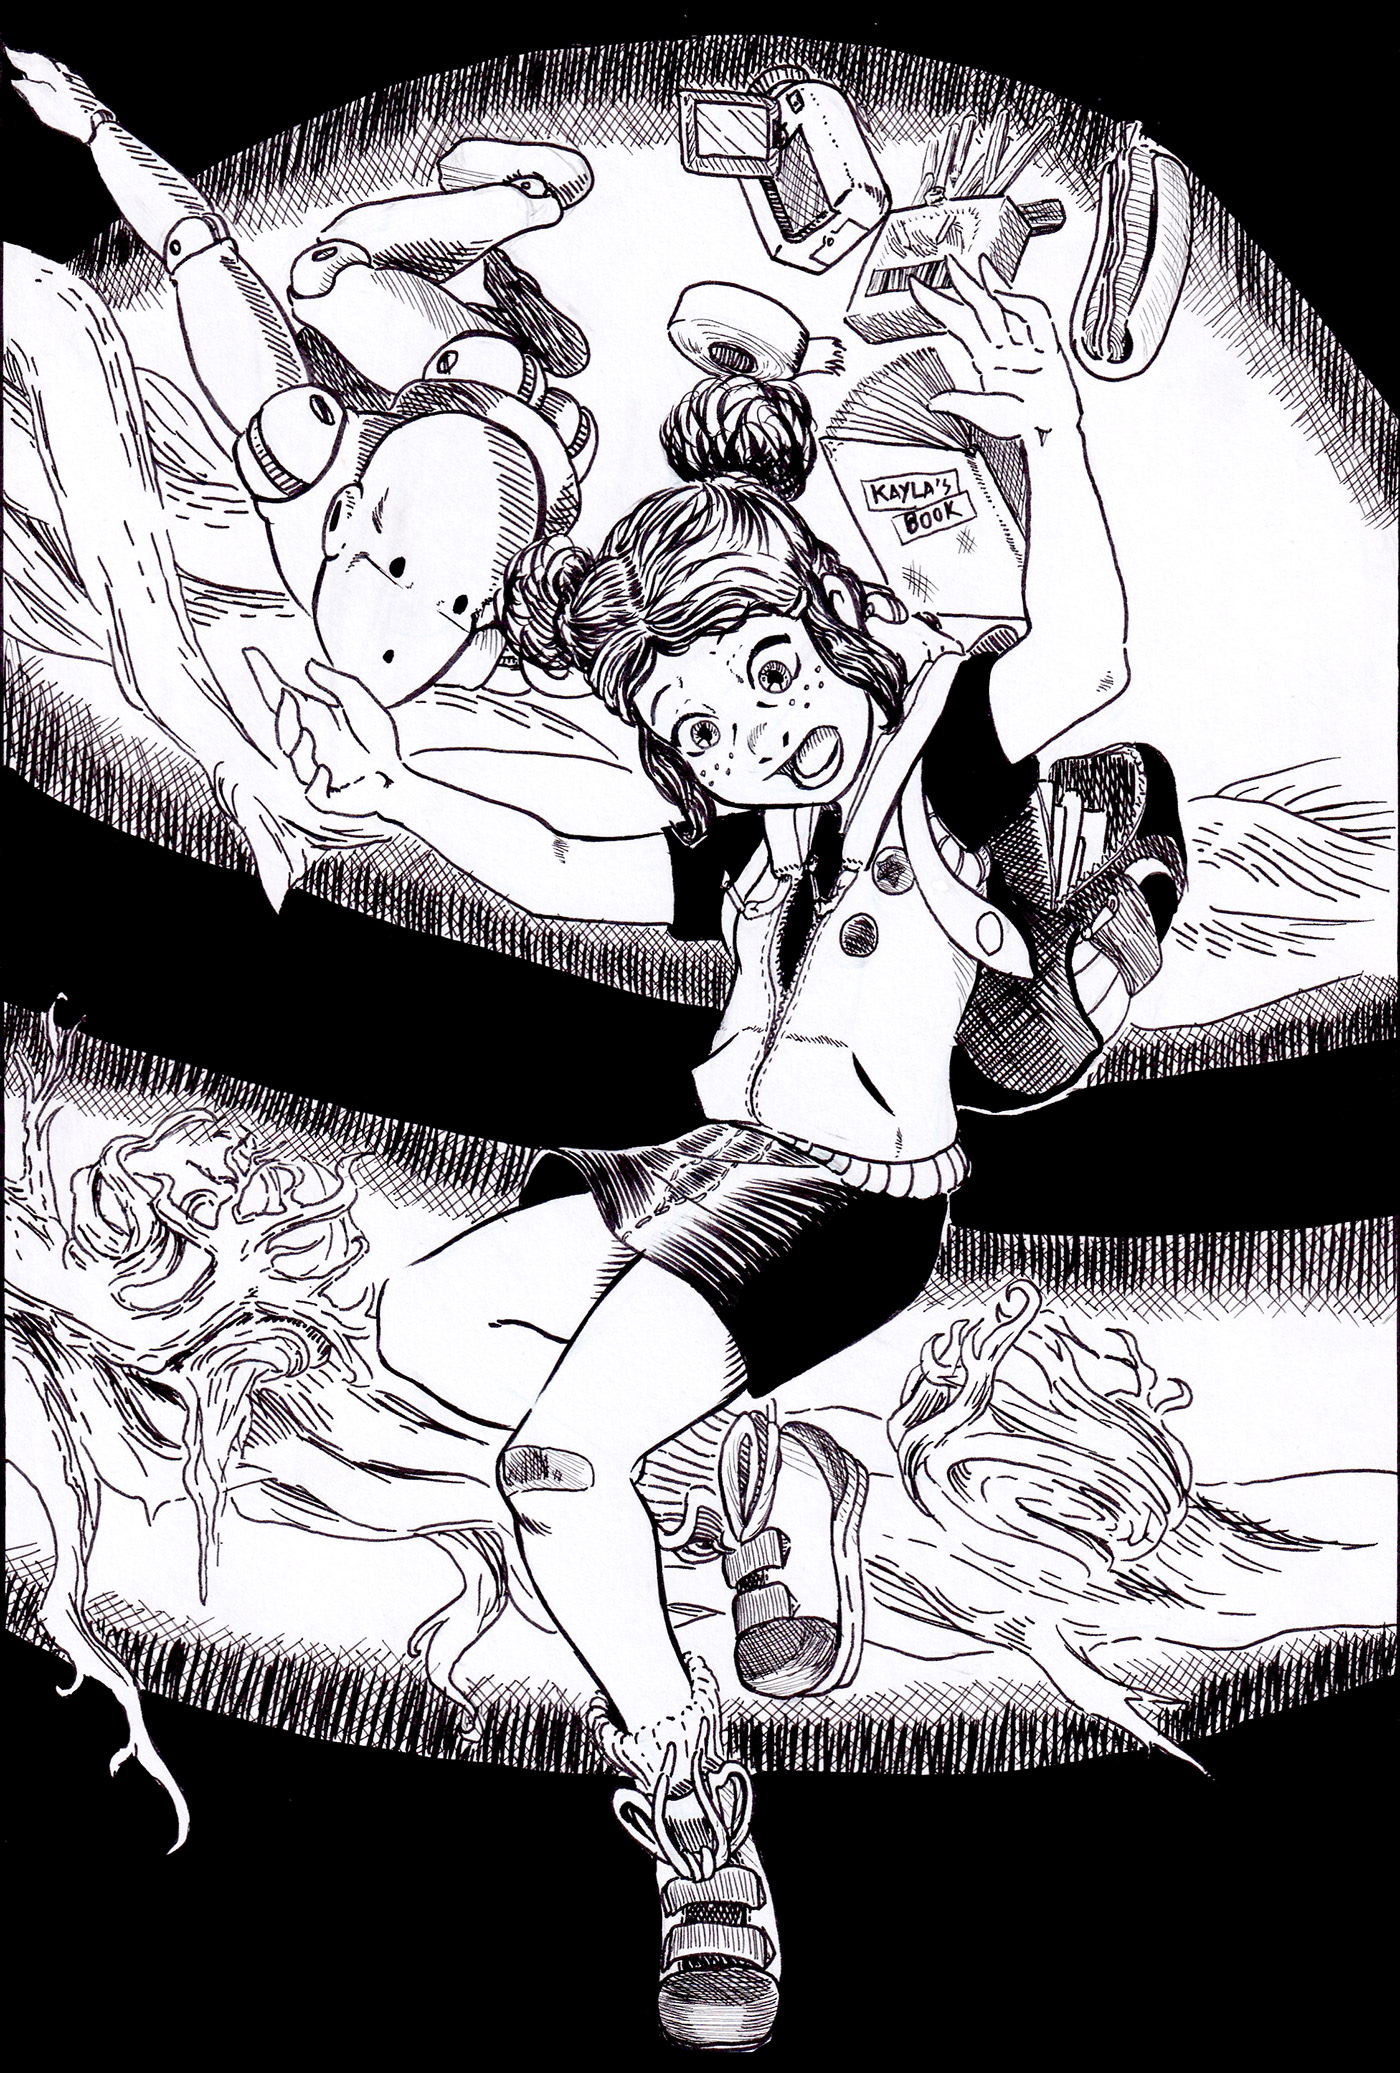 TRADITIONAL ART Manga Style black and white ILLUSTRATION  comic art comic cartoon charcater design